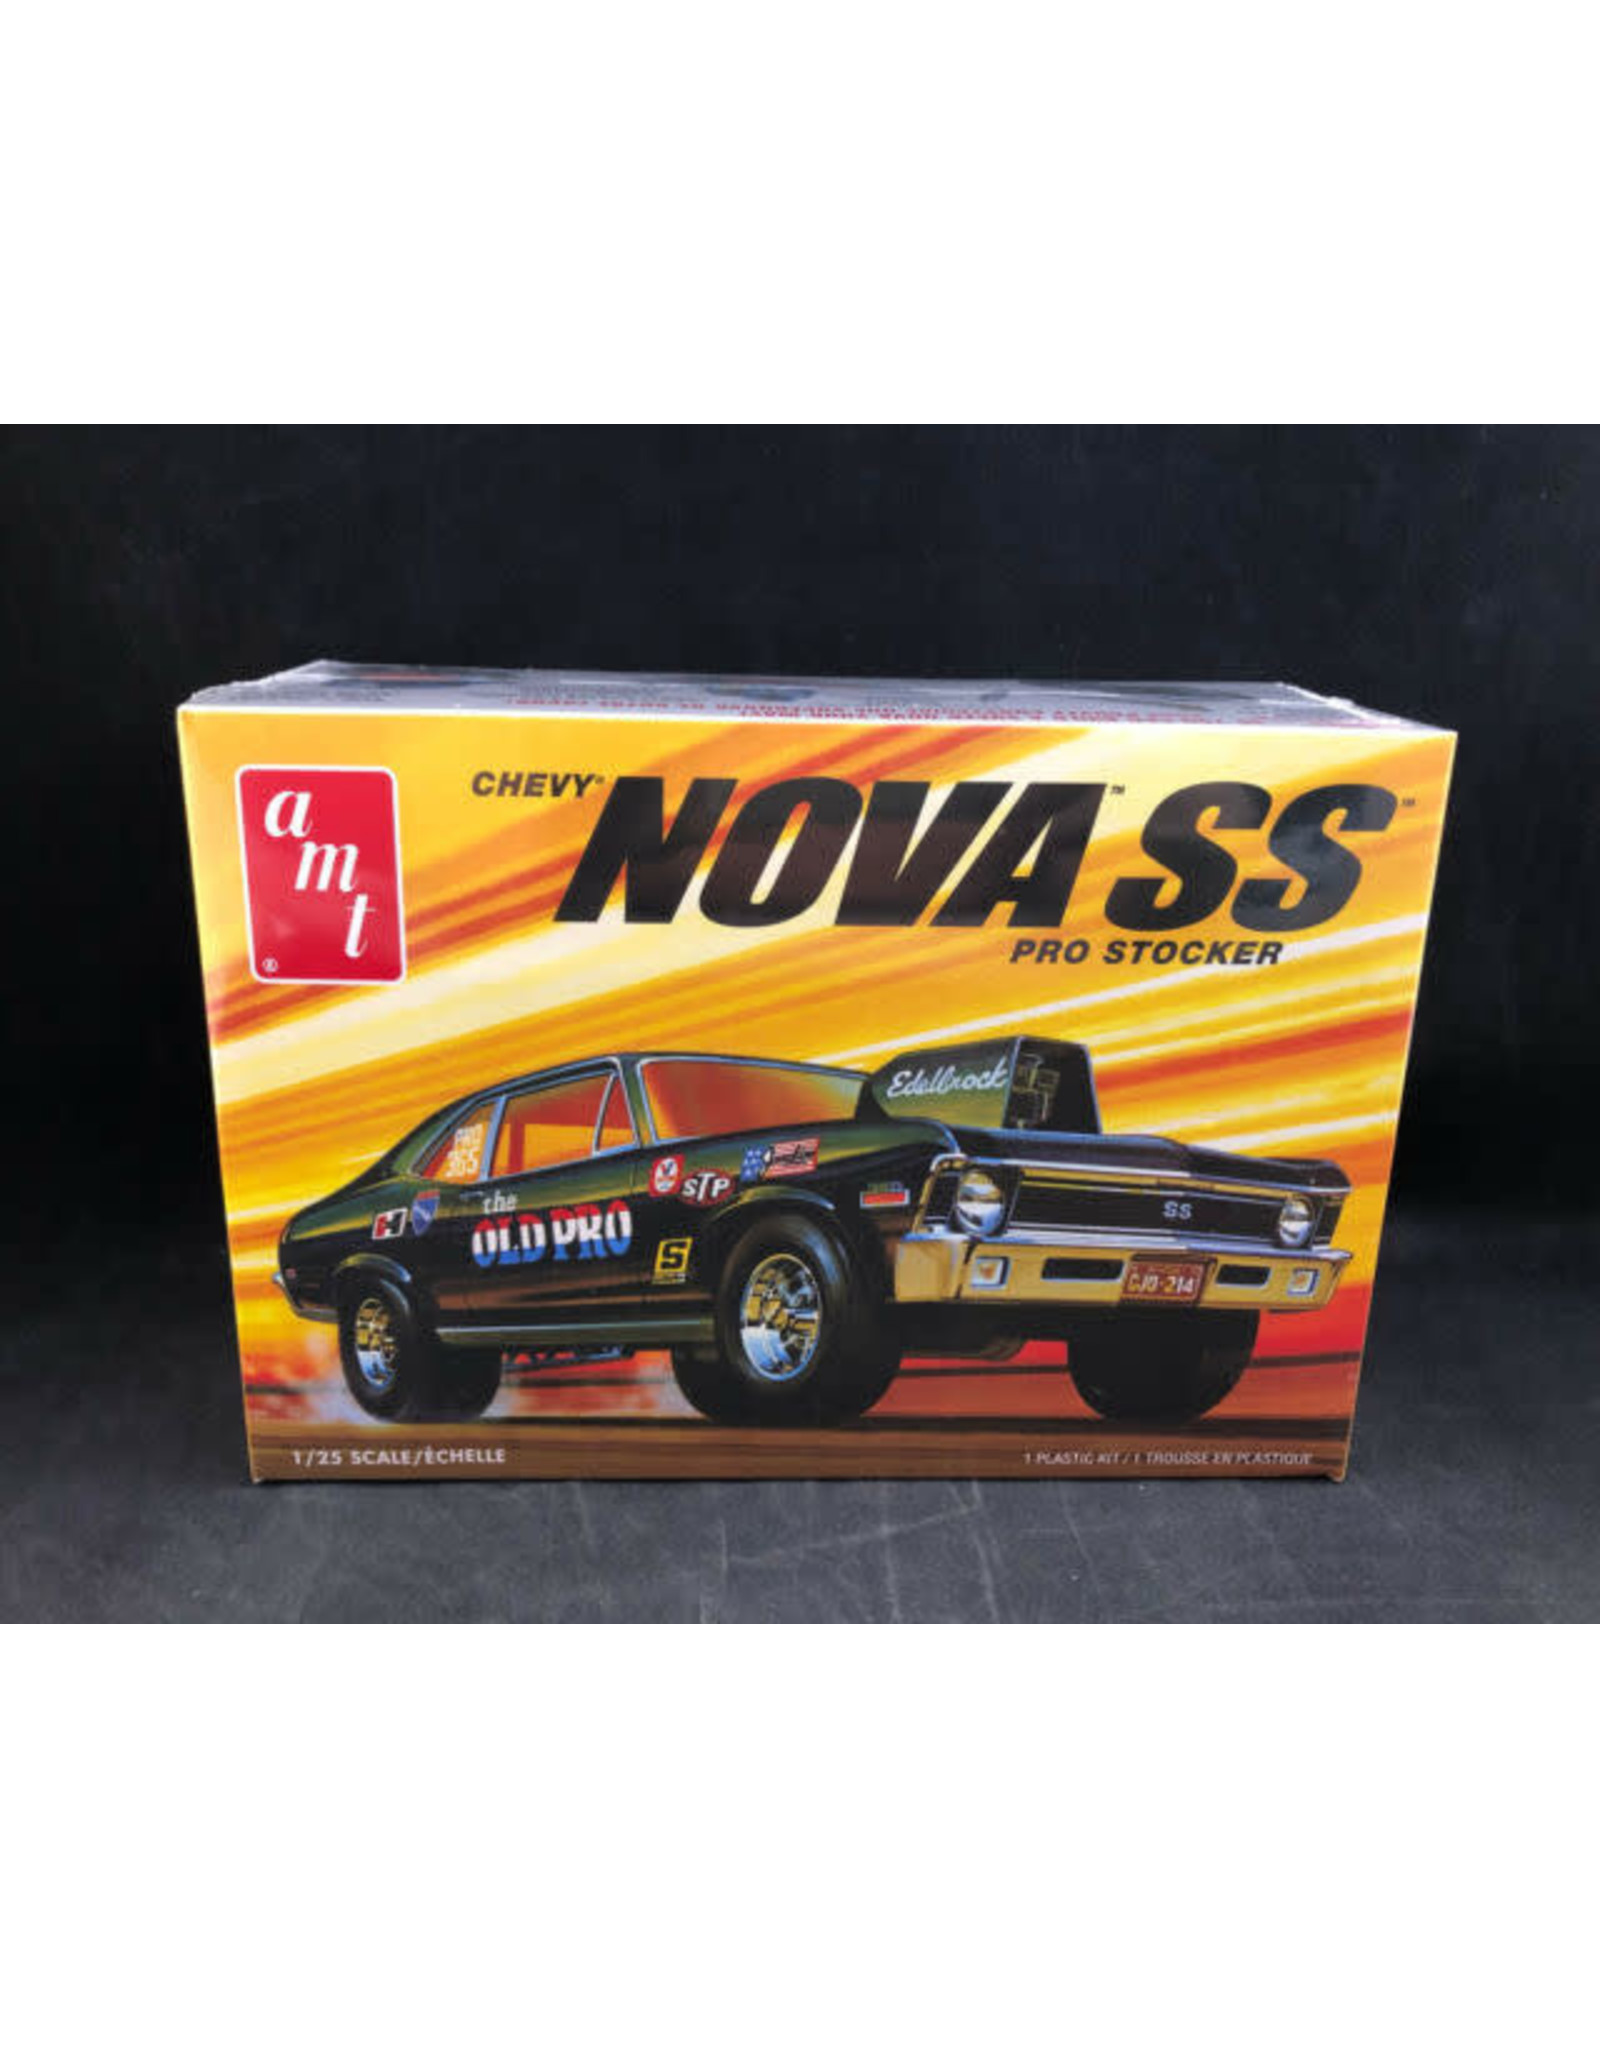 amt Chevy Nova SS pro stocker